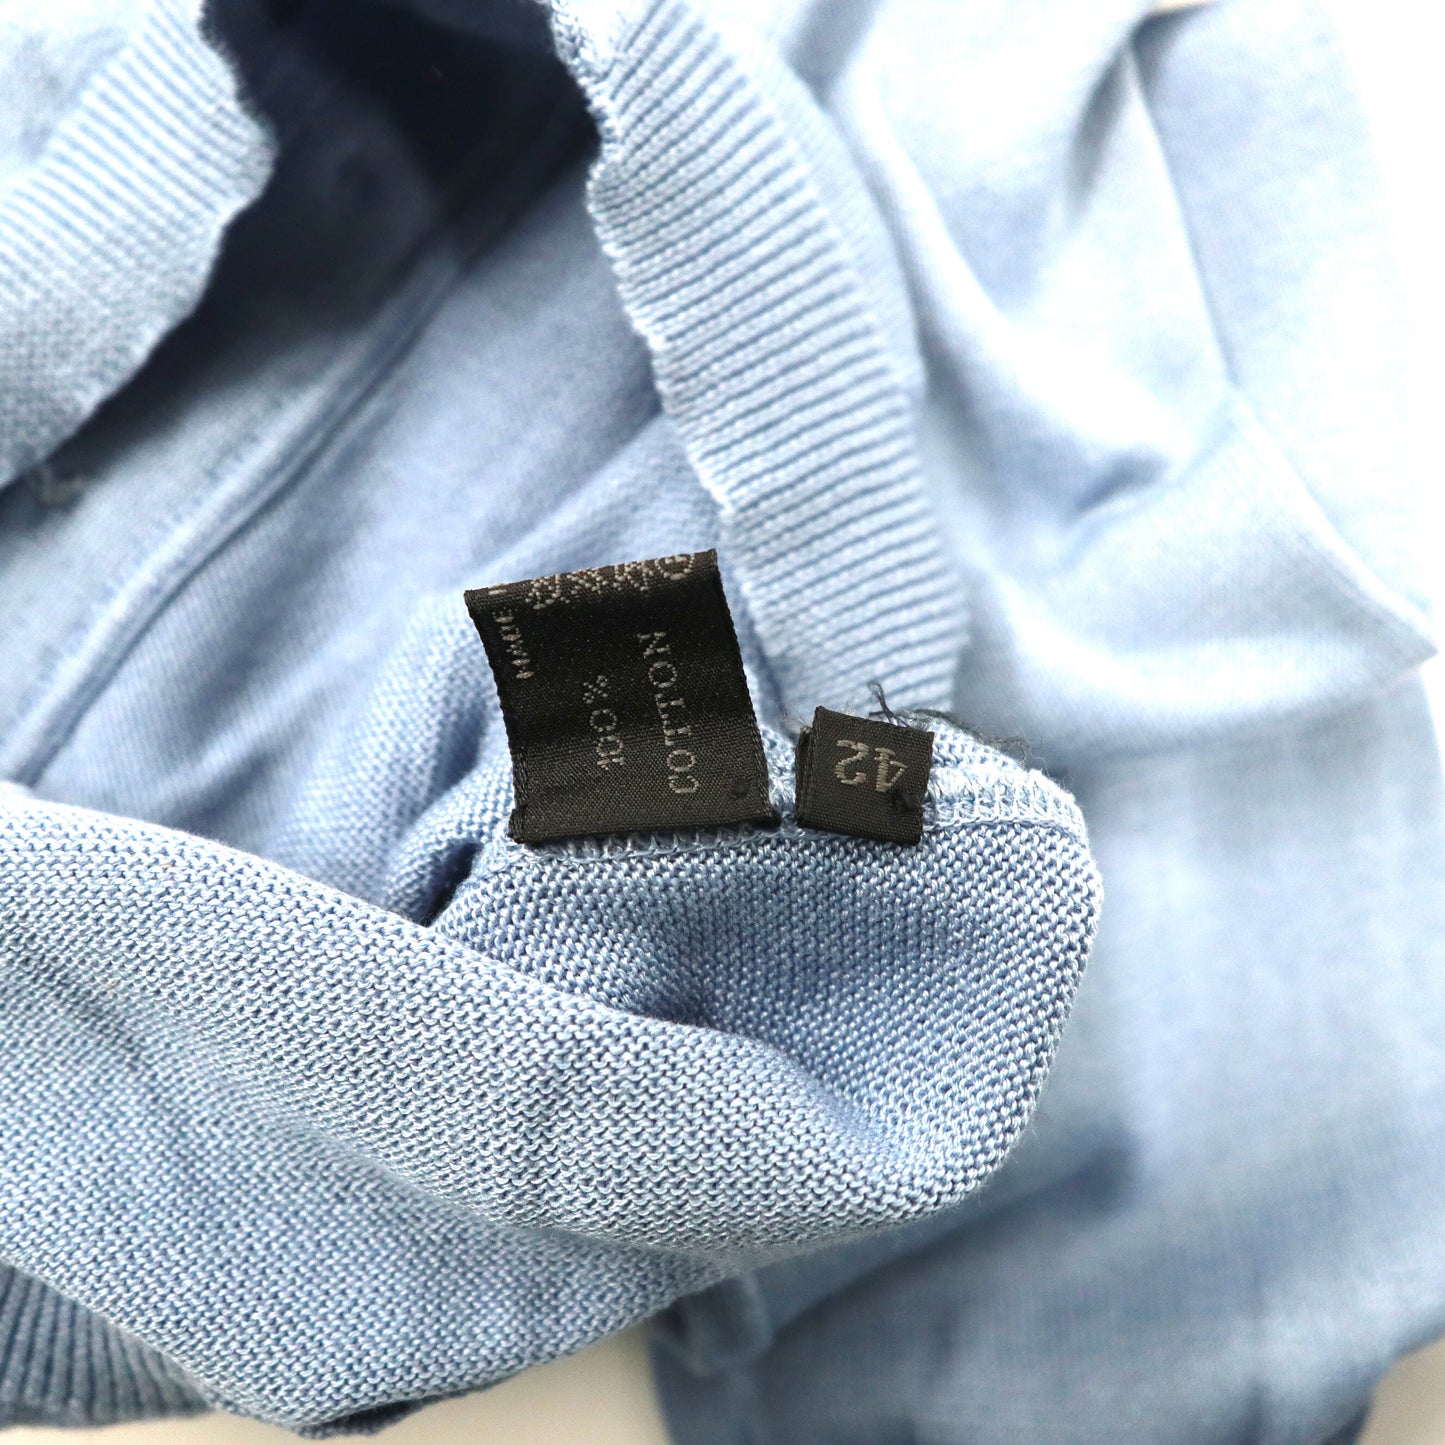 PRADA ニットシャツ セーター 42 ブルー イタリア製 コットン